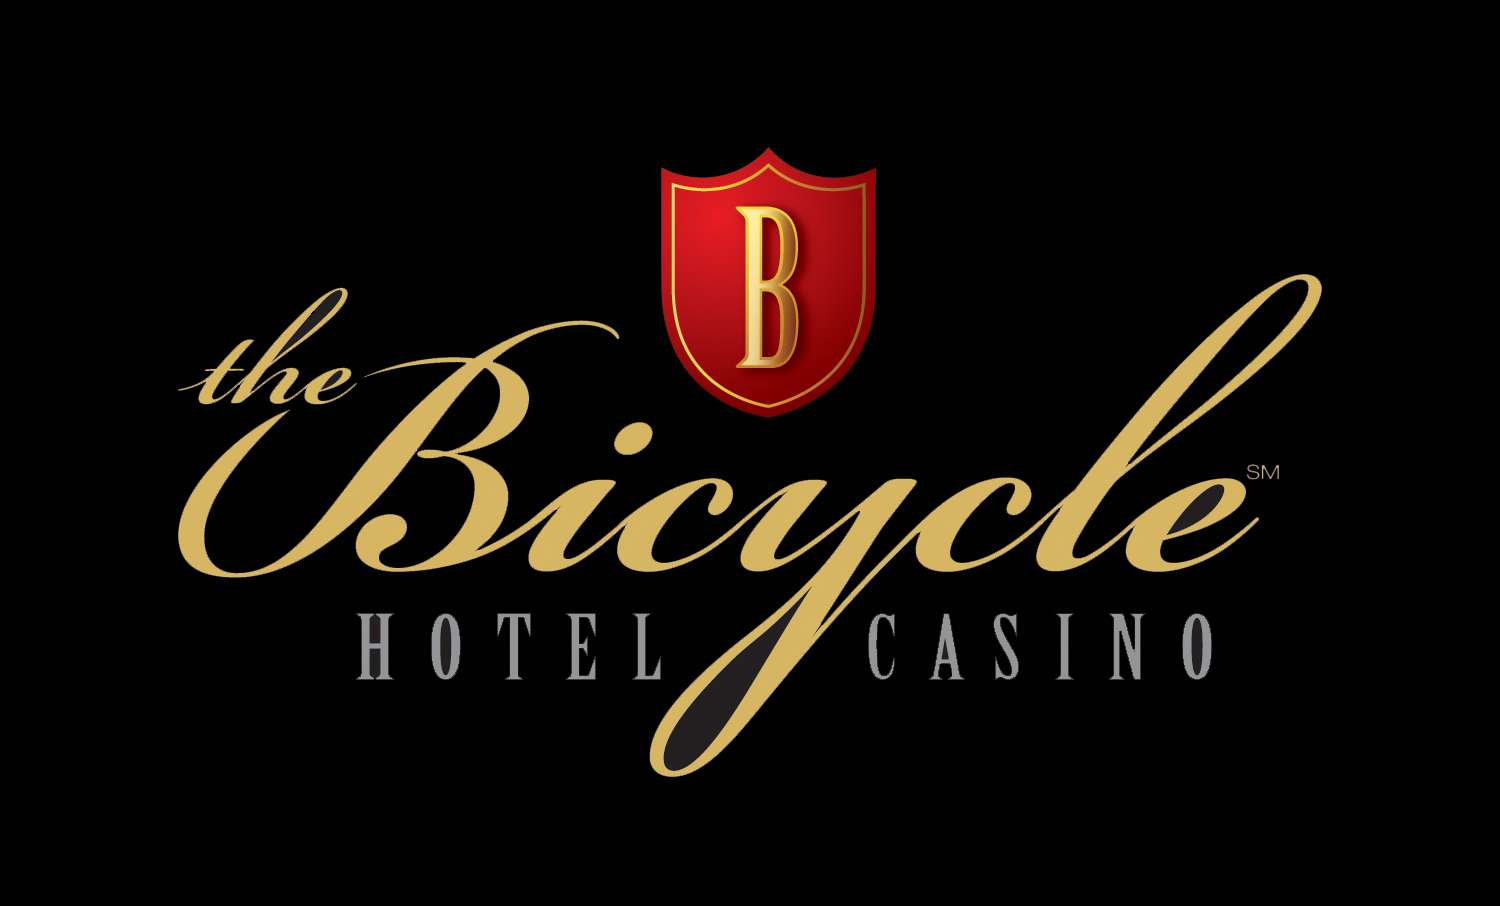 Bicycle Club Casino Poker